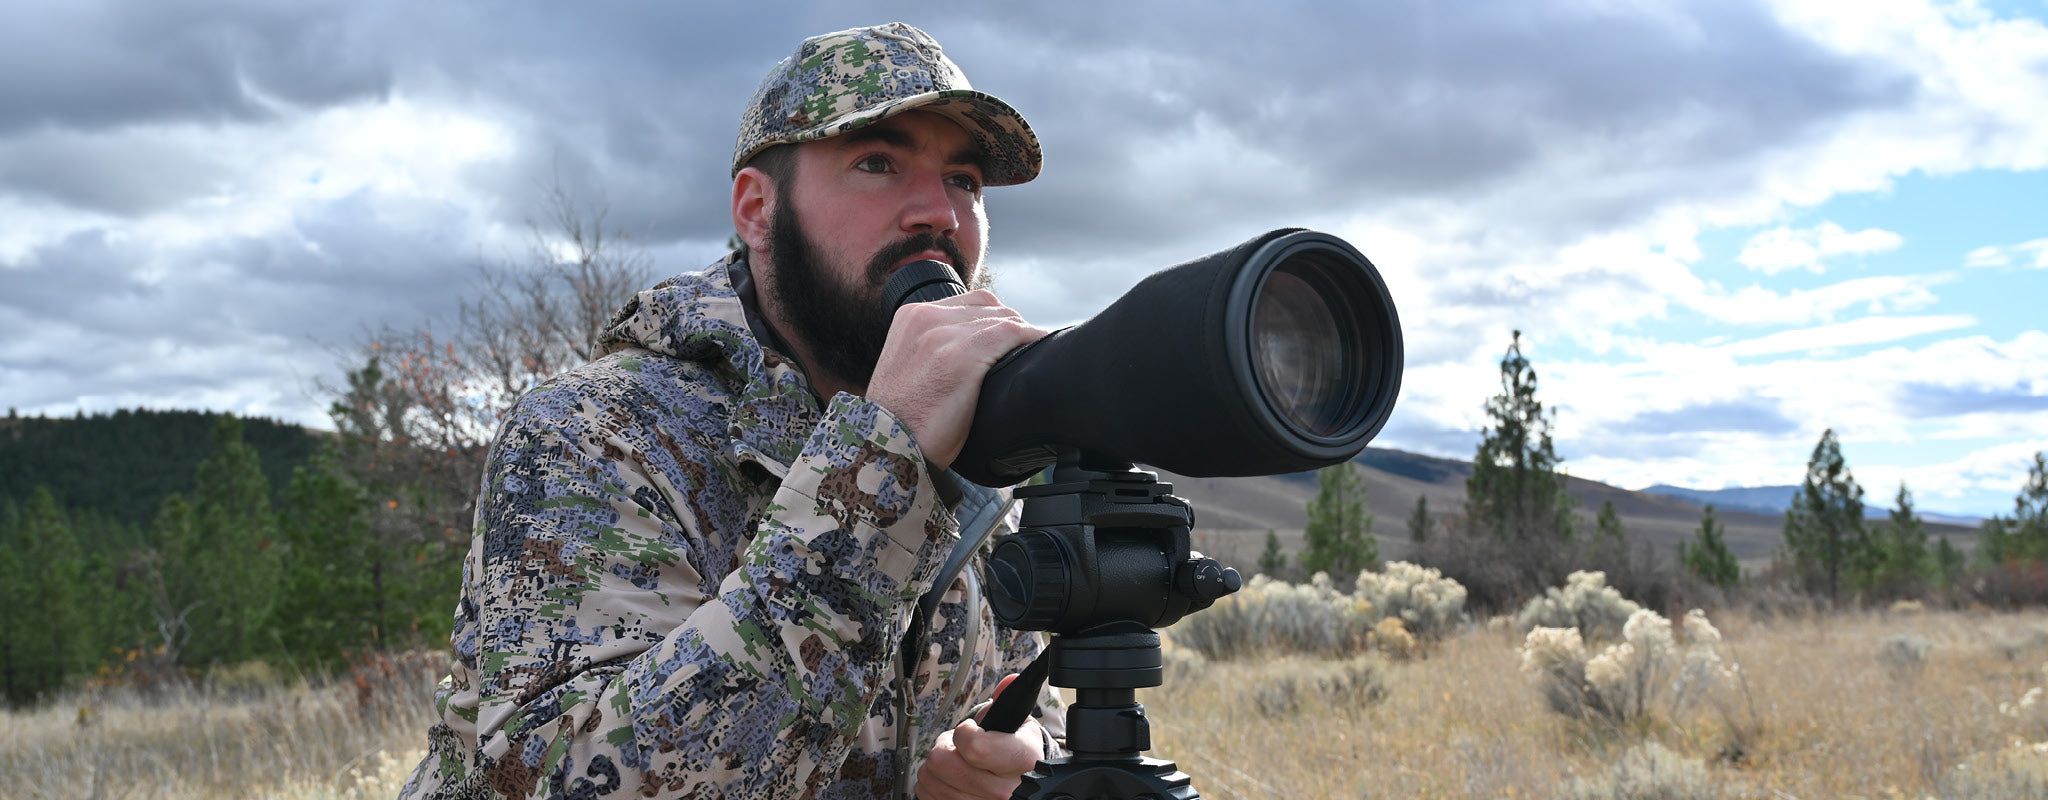 The Ultimate Elk Hunting Gear List